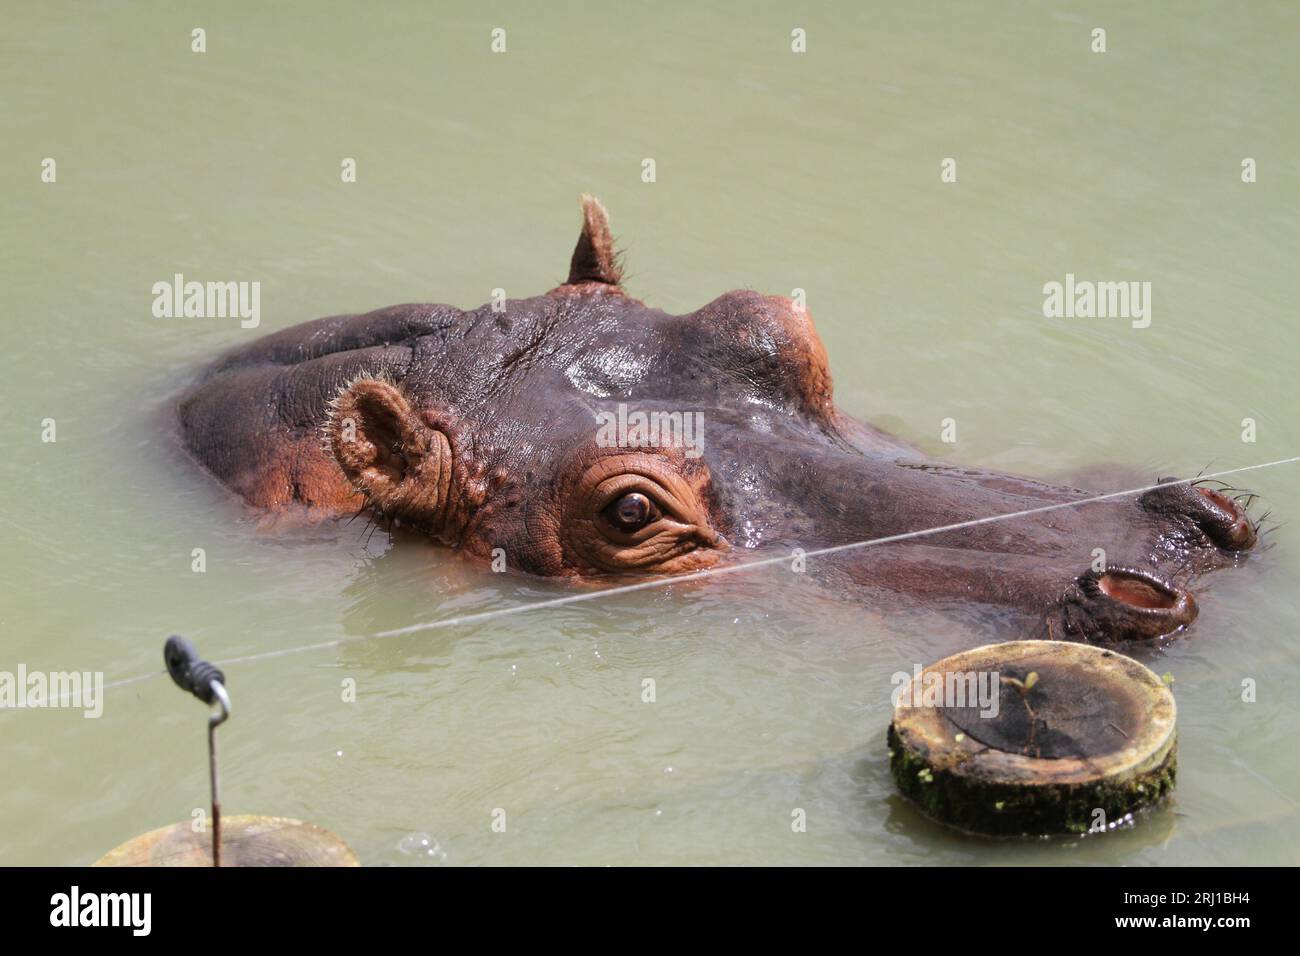 Hippopotamus amphibius outside in the water bathing Stock Photo